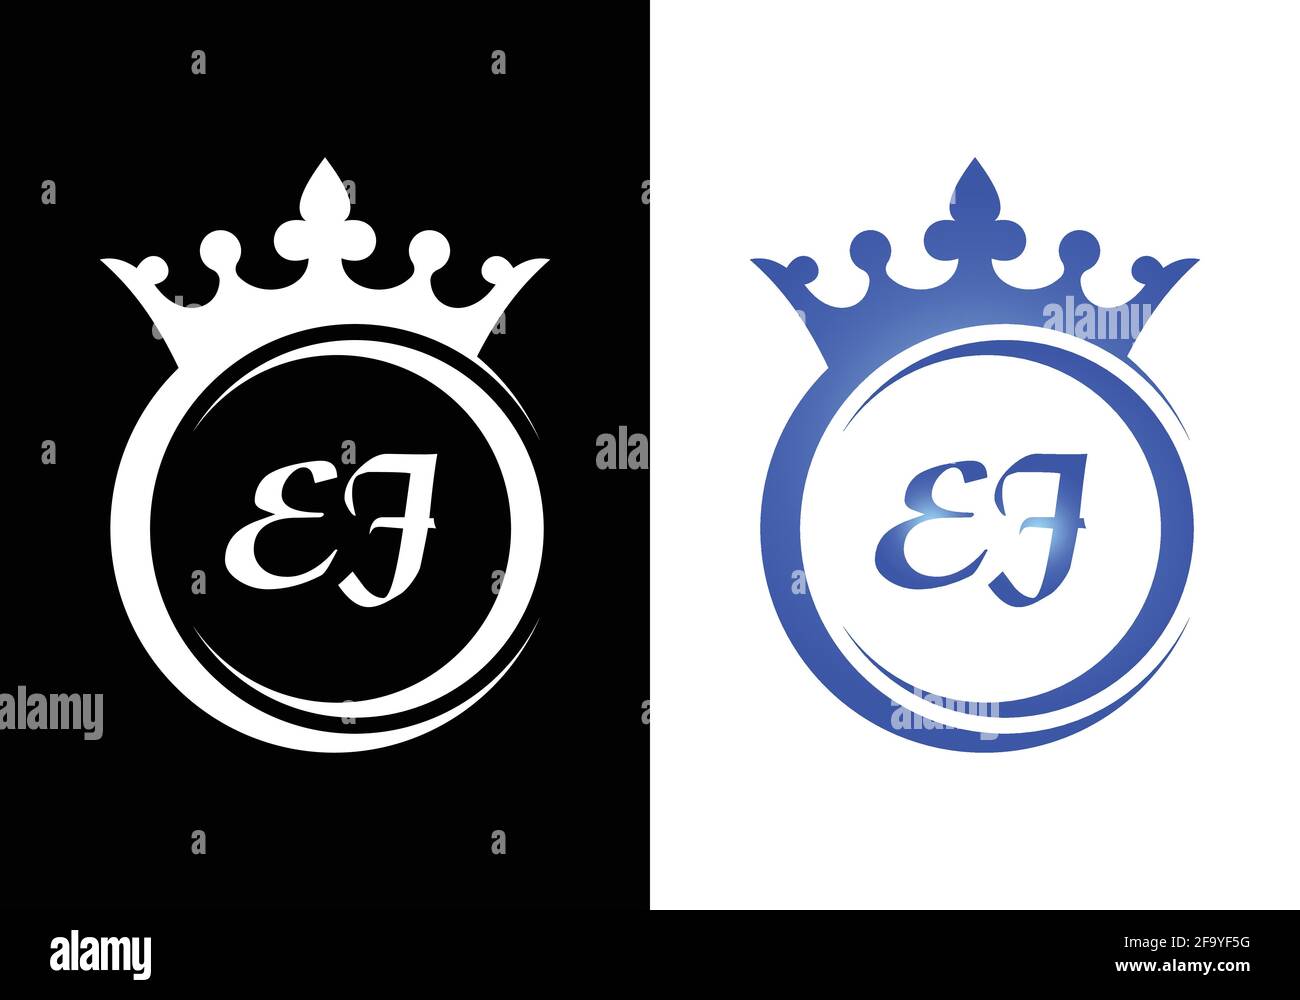 king crown letter alphabet E J for company logo icon design. Stock Vector